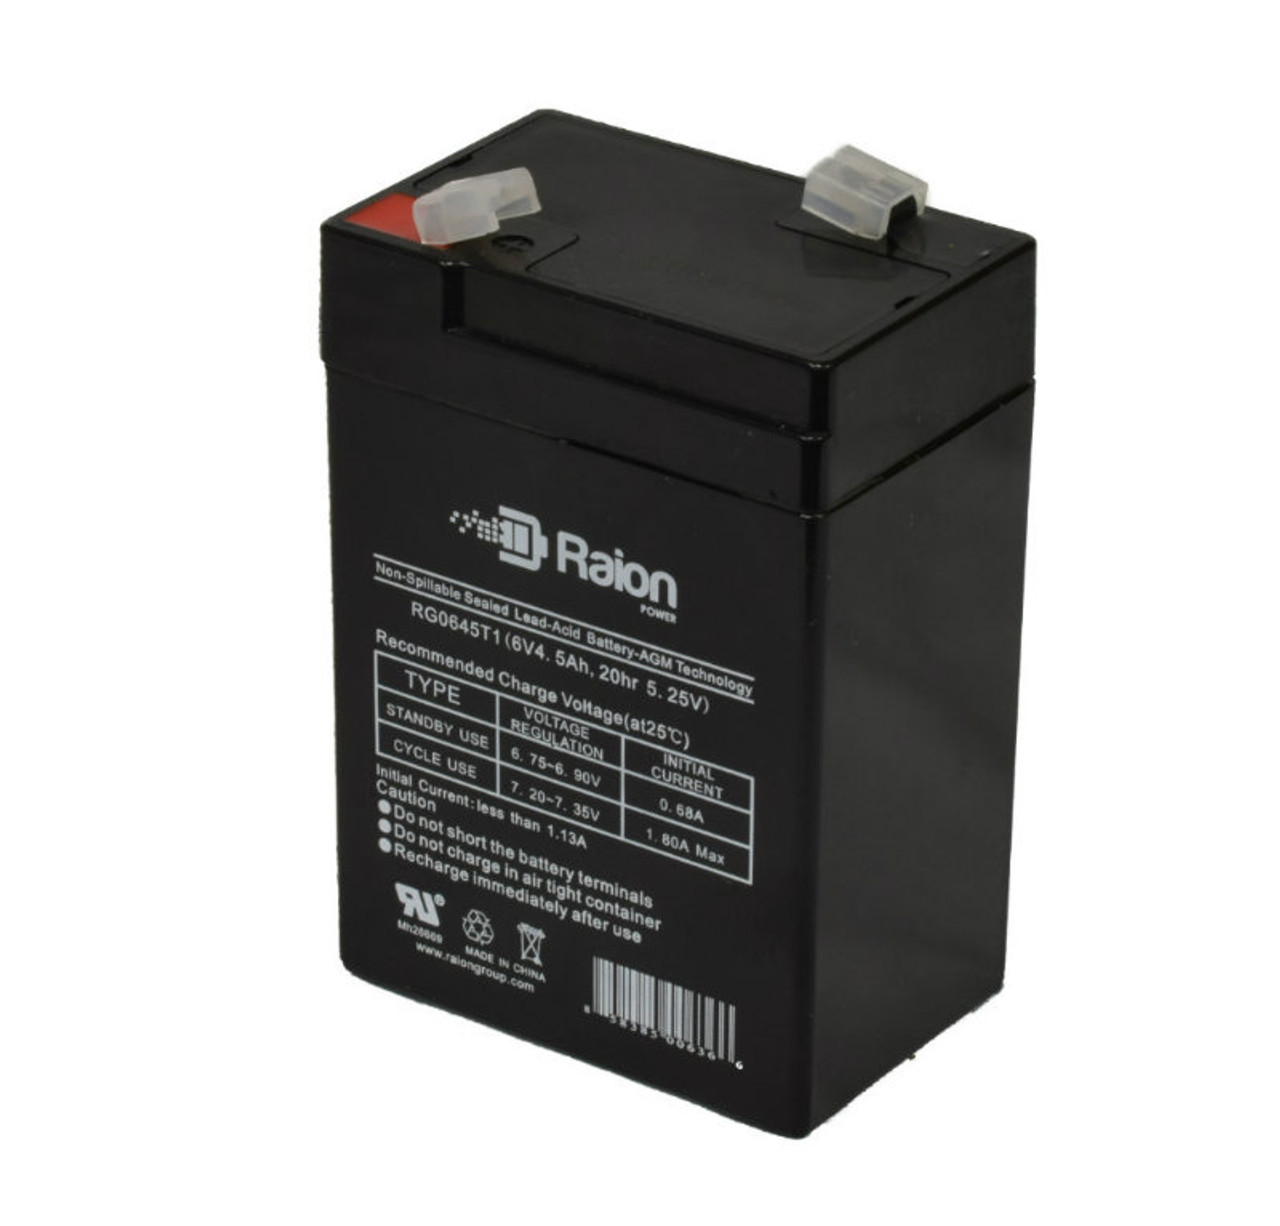 Raion Power RG0645T1 6V 4.5Ah Replacement Battery Cartridge for RIMA UN4.2-6